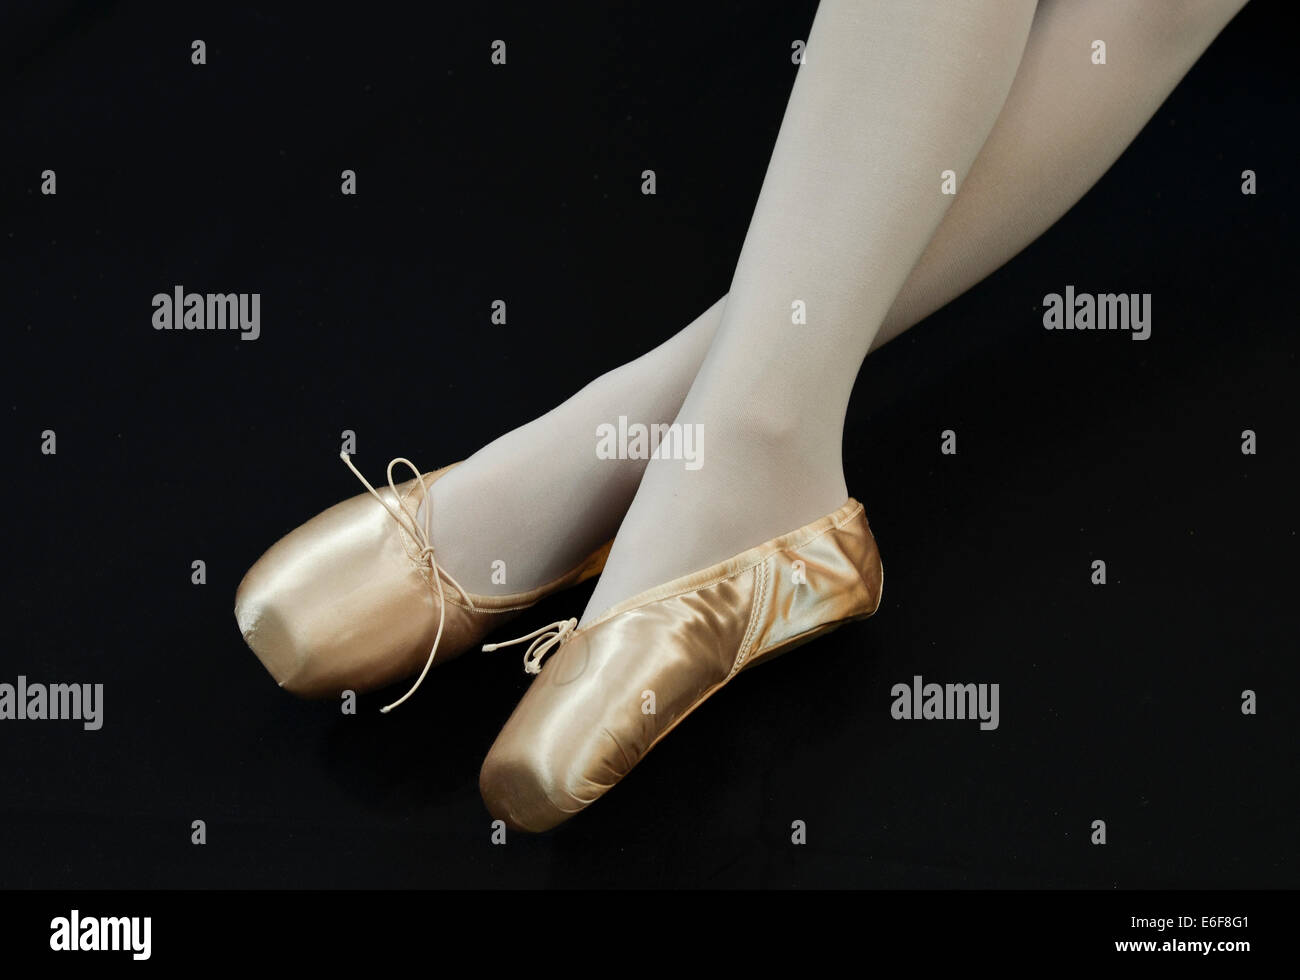 Ballerina's feet in ballet shoes on black background Stock Photo